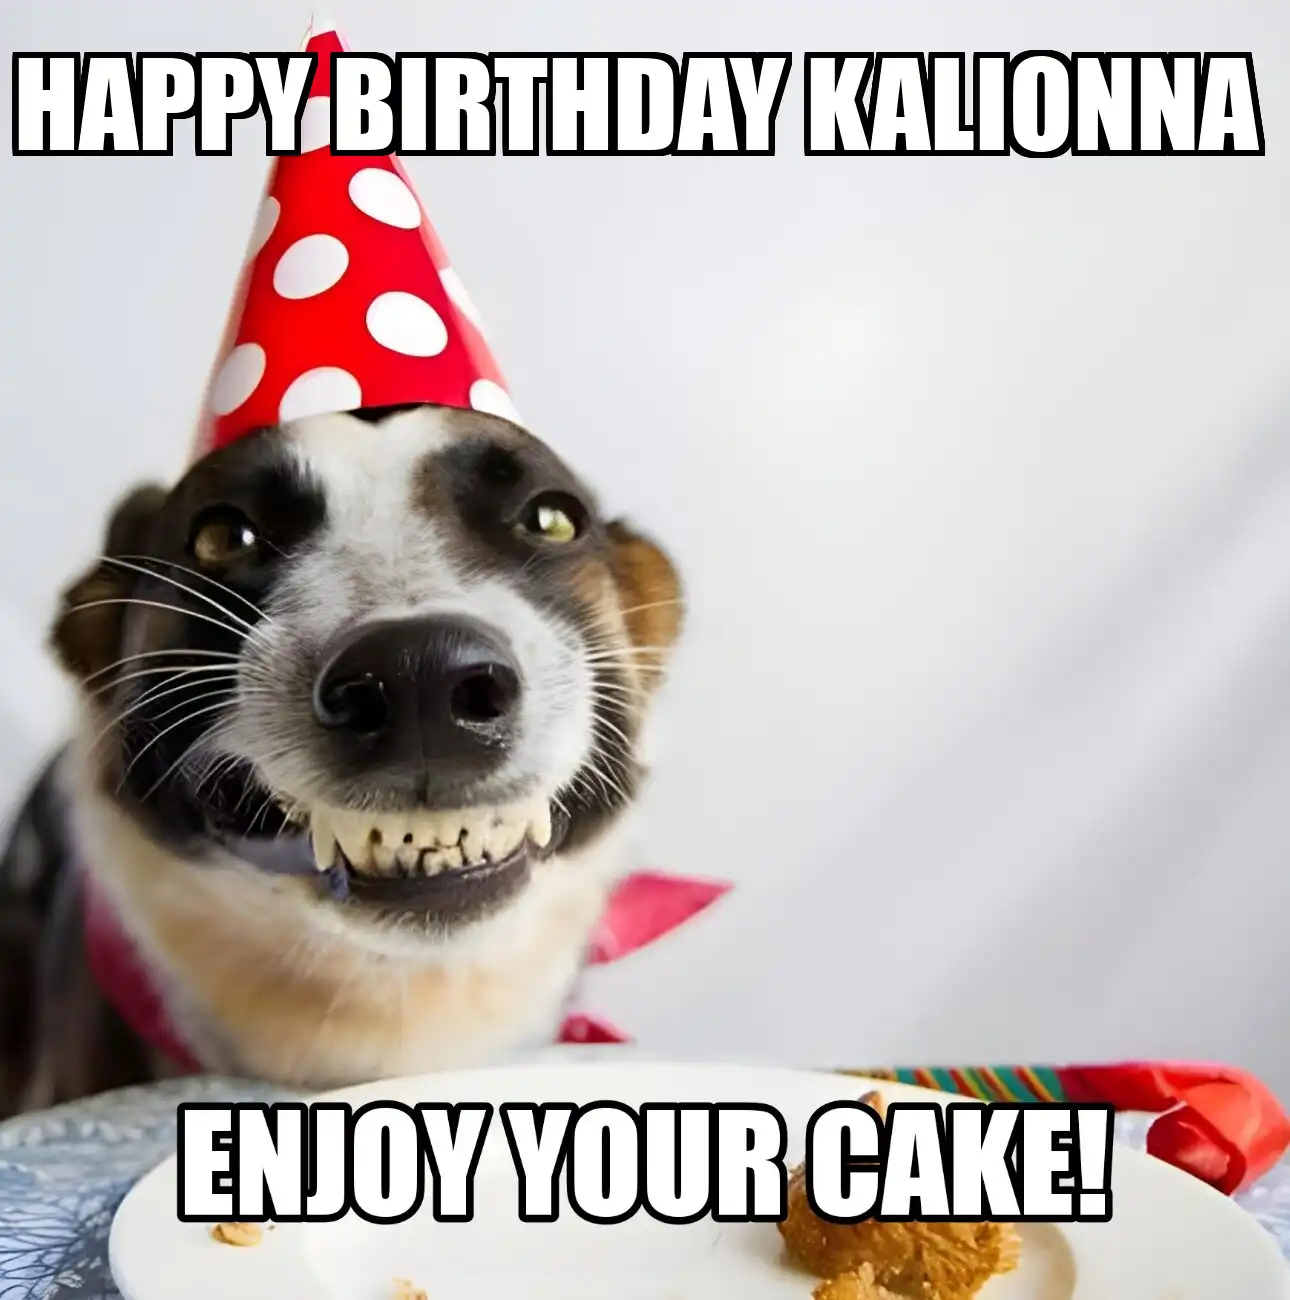 Happy Birthday Kalionna Enjoy Your Cake Dog Meme